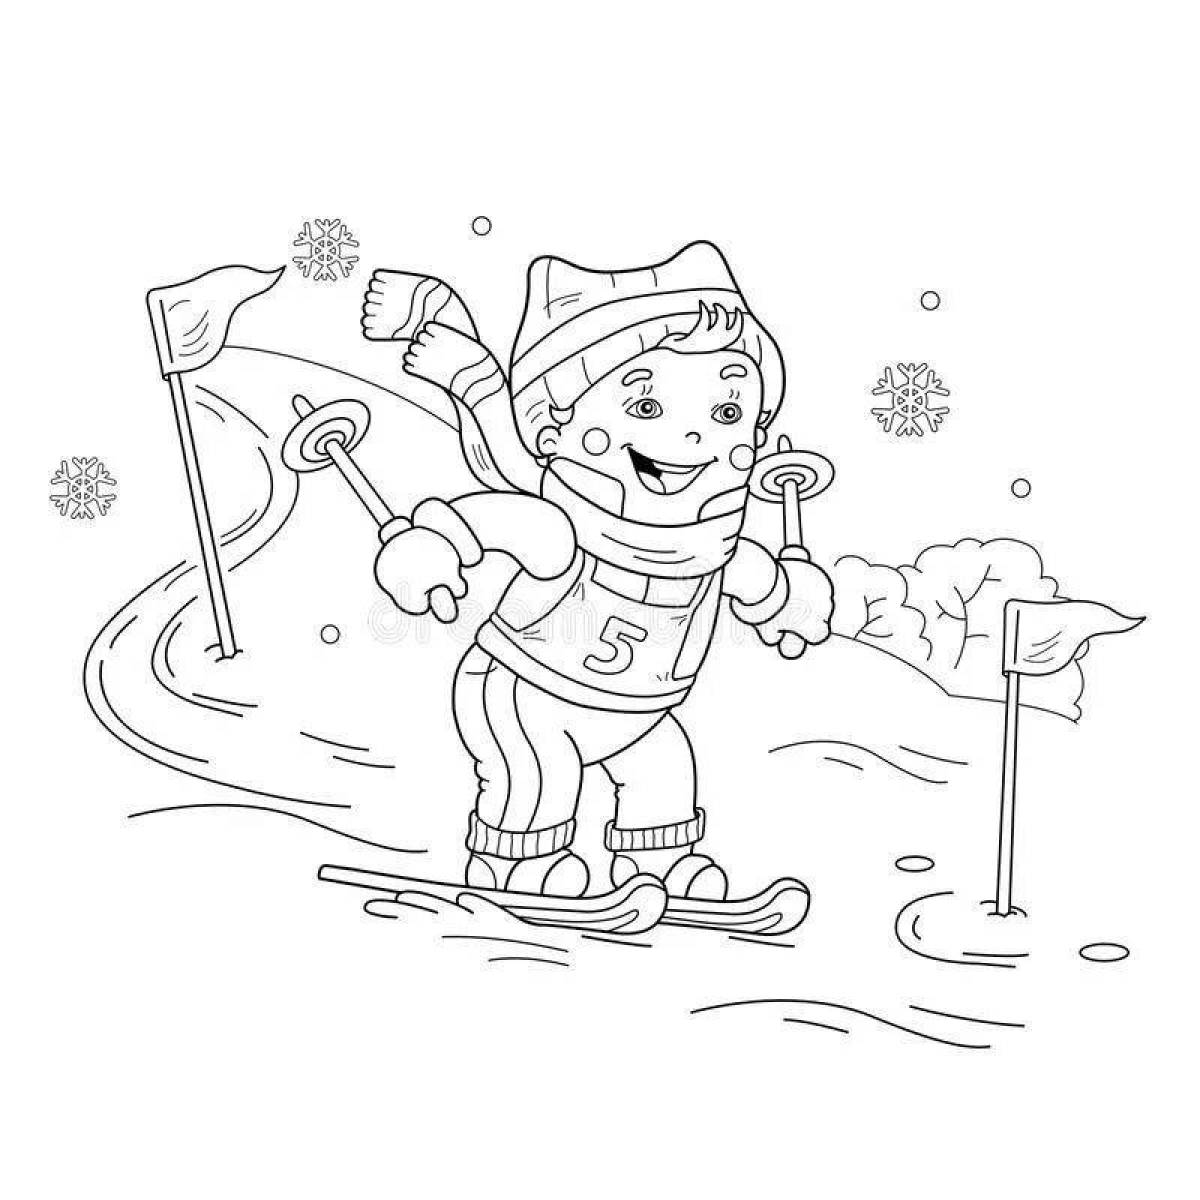 Child on skis #4